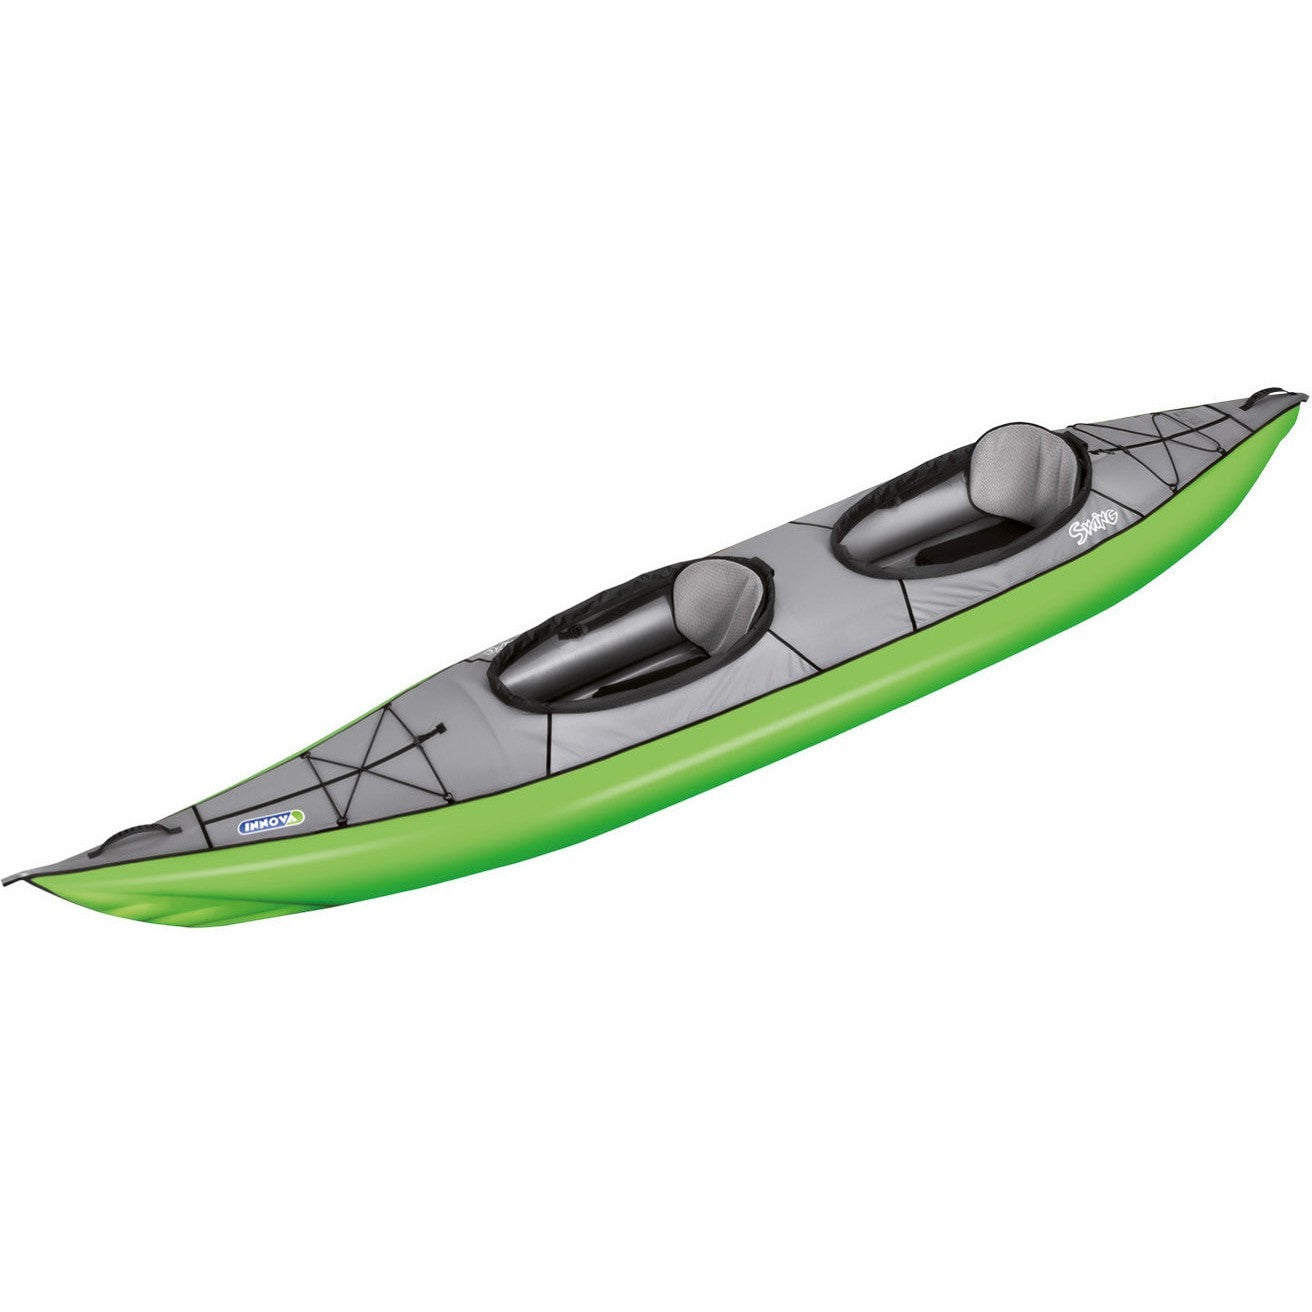 Innova Swing II Tandem Inflatable Kayak - Kayak Creek